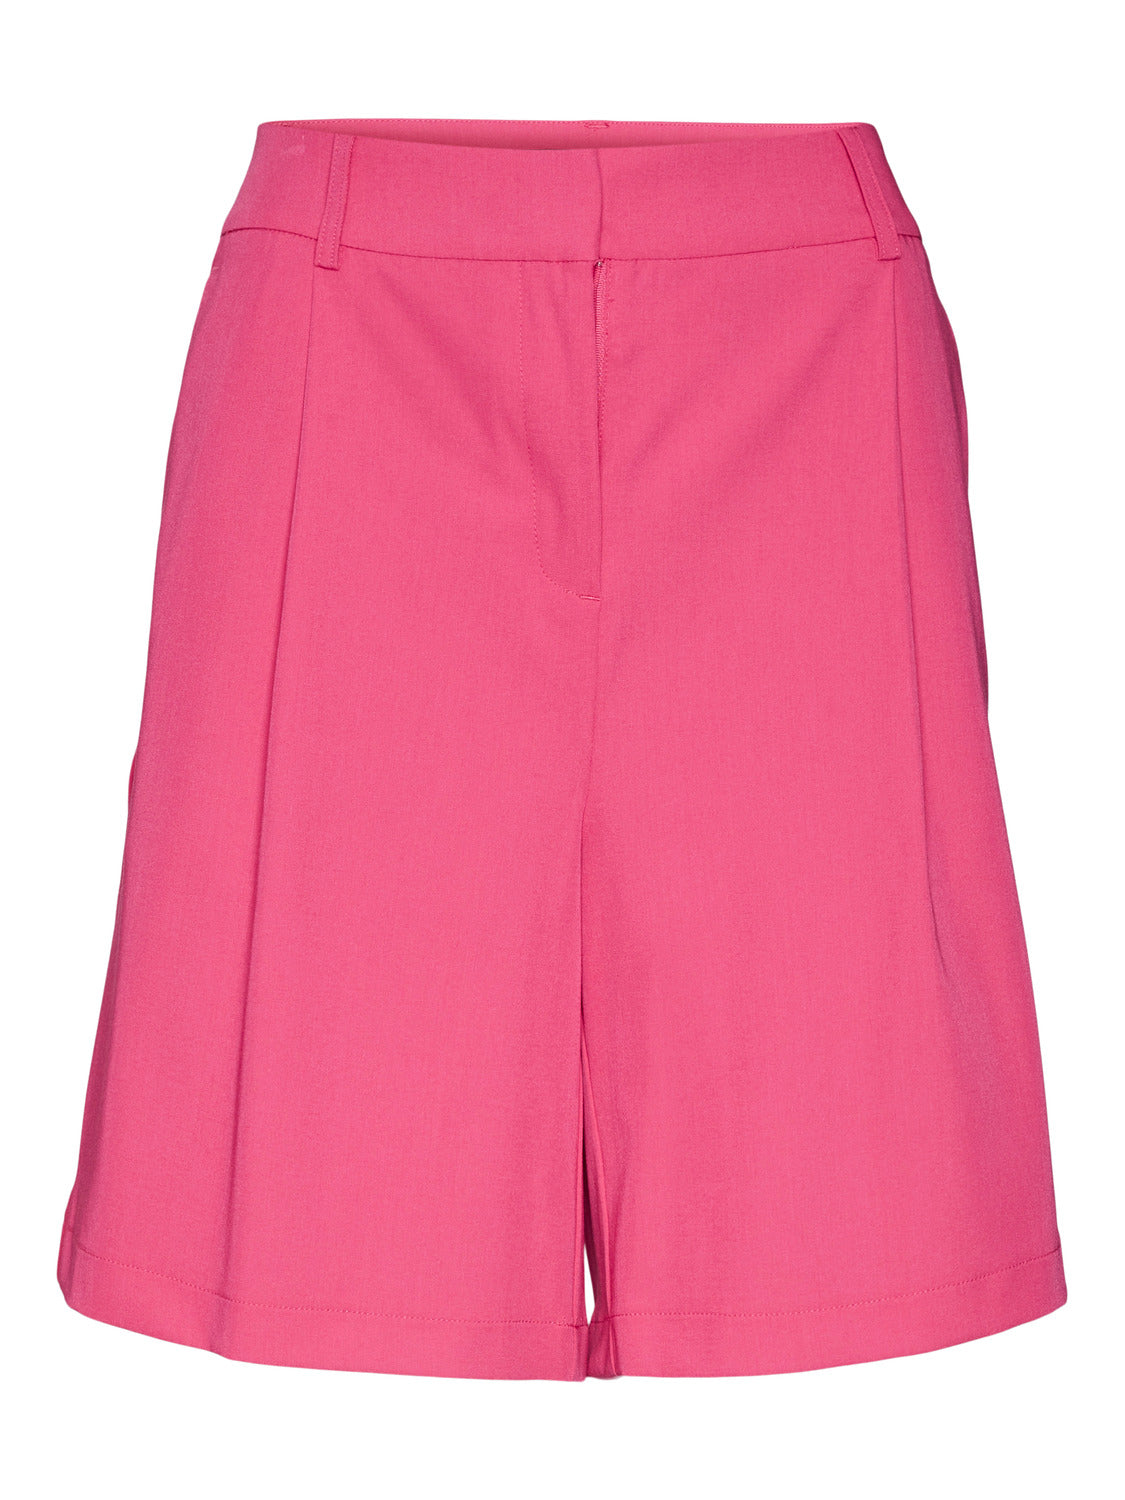 VMZELDA Shorts - Pink Yarrow